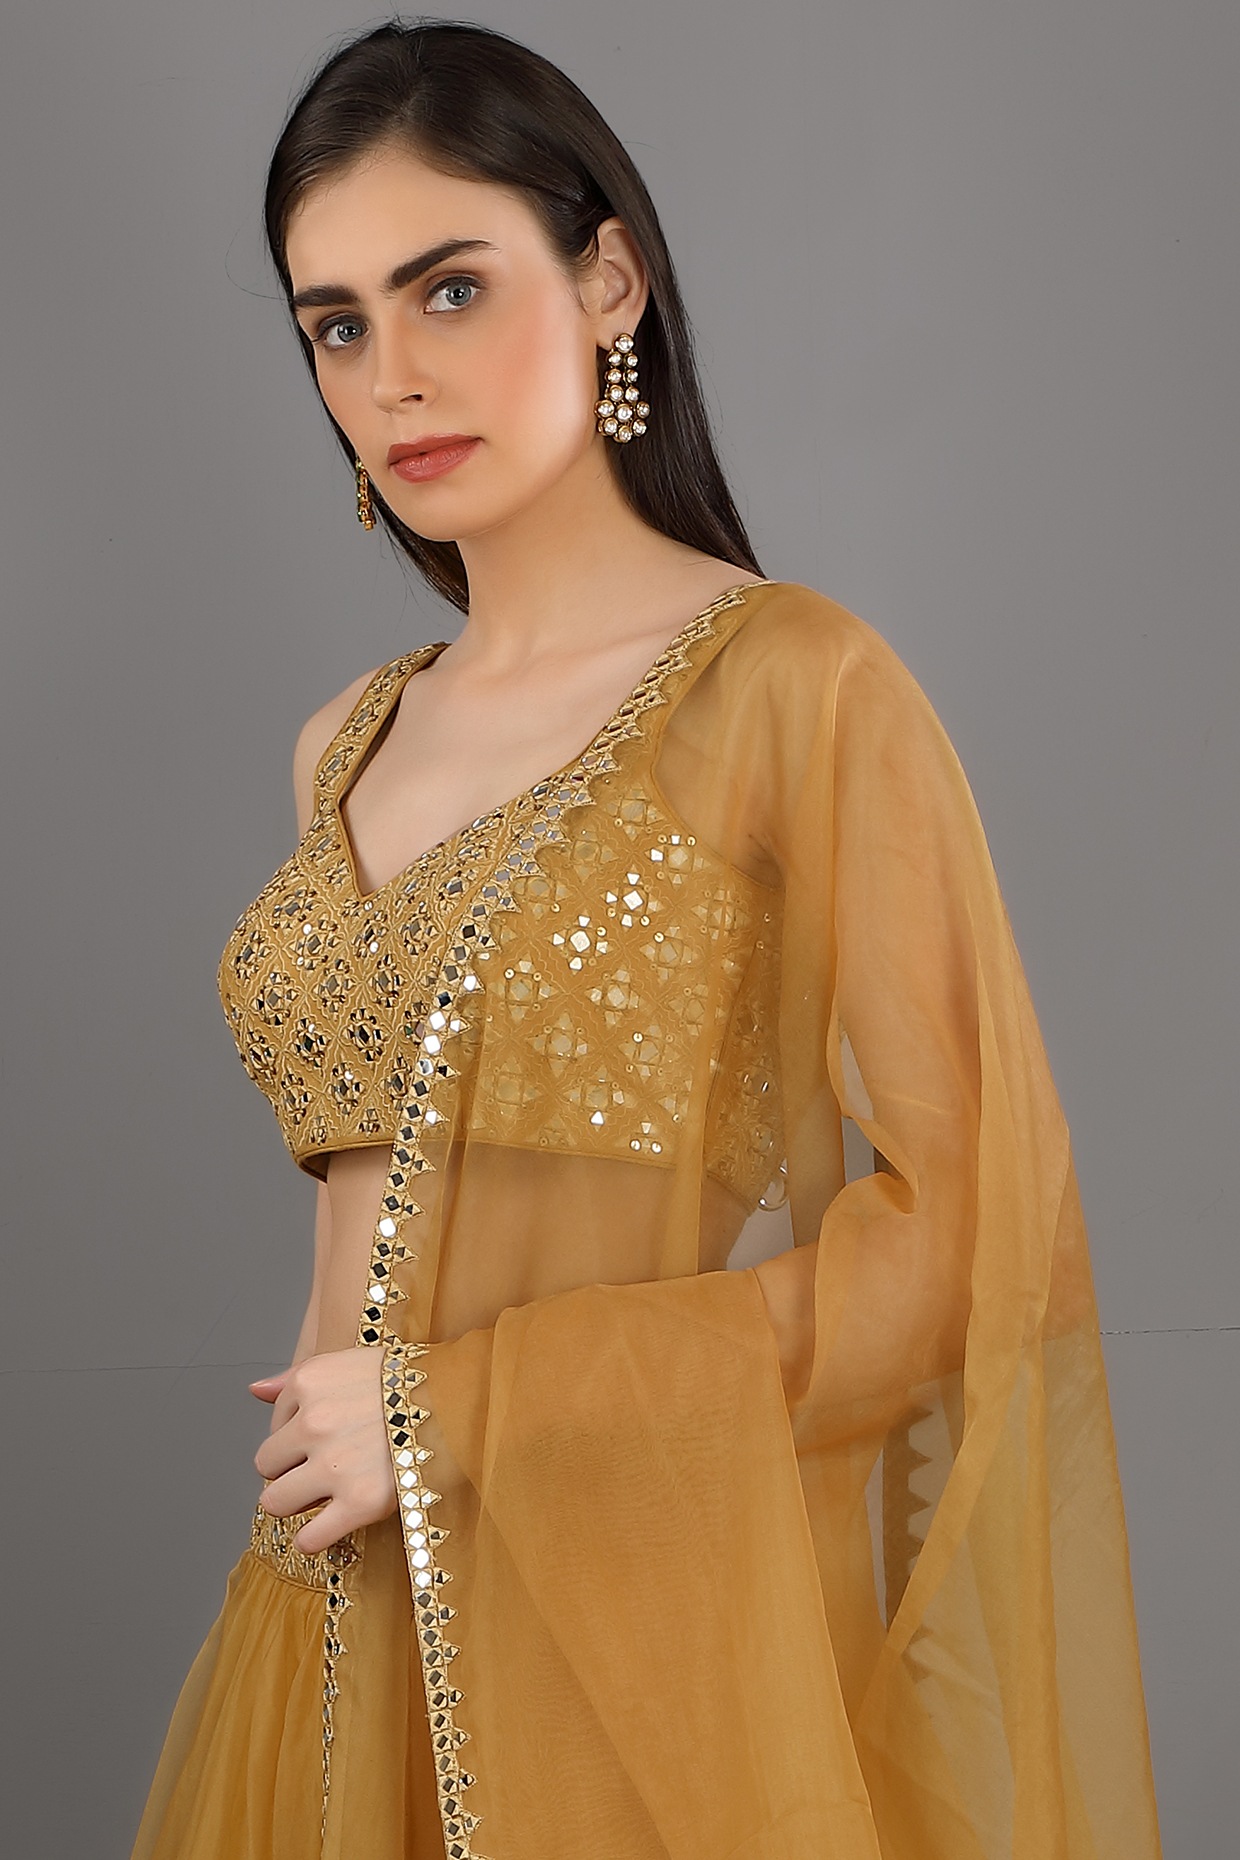 Reynu Taandon Sequin Embellished Lehenga Set | Gold, Sleeveless | Simple  lehenga, Gold blouse designs, Indian fashion dresses